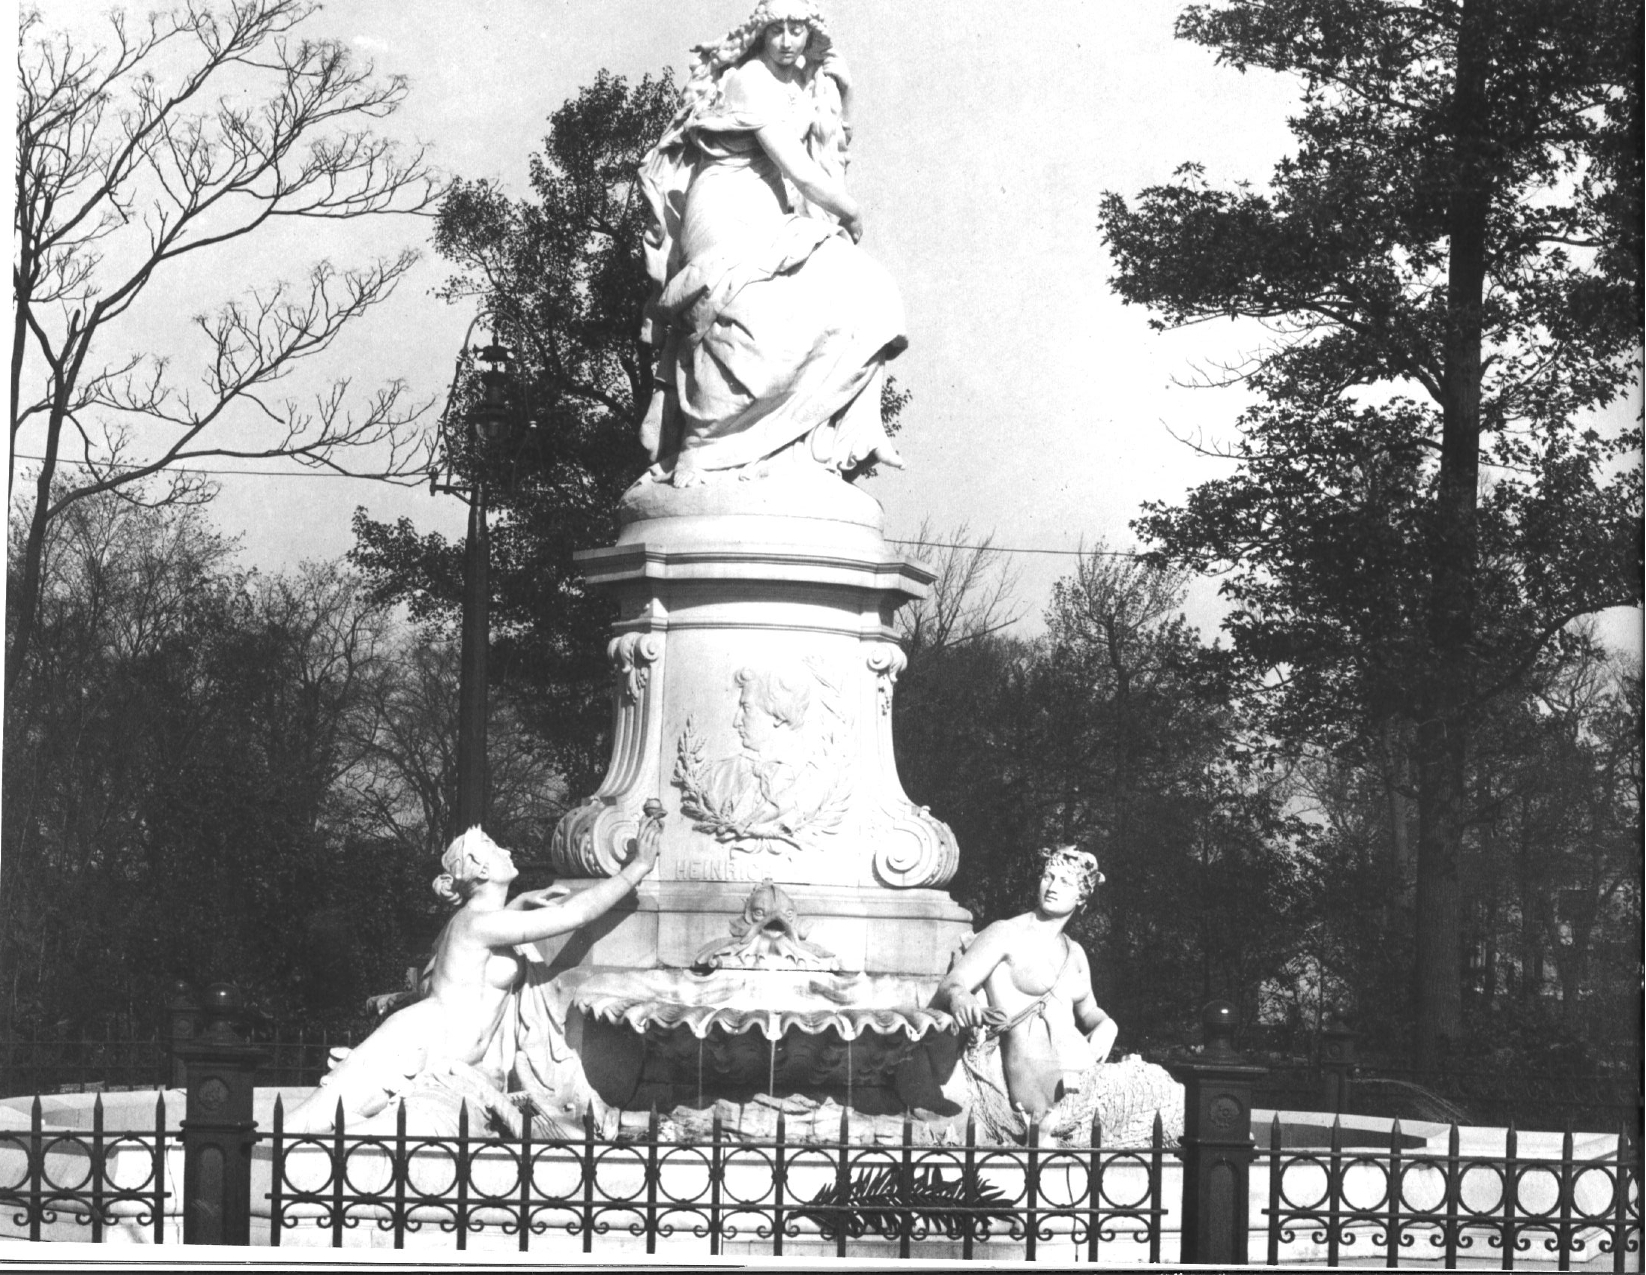 The Lorelei Fountain in its original glory.